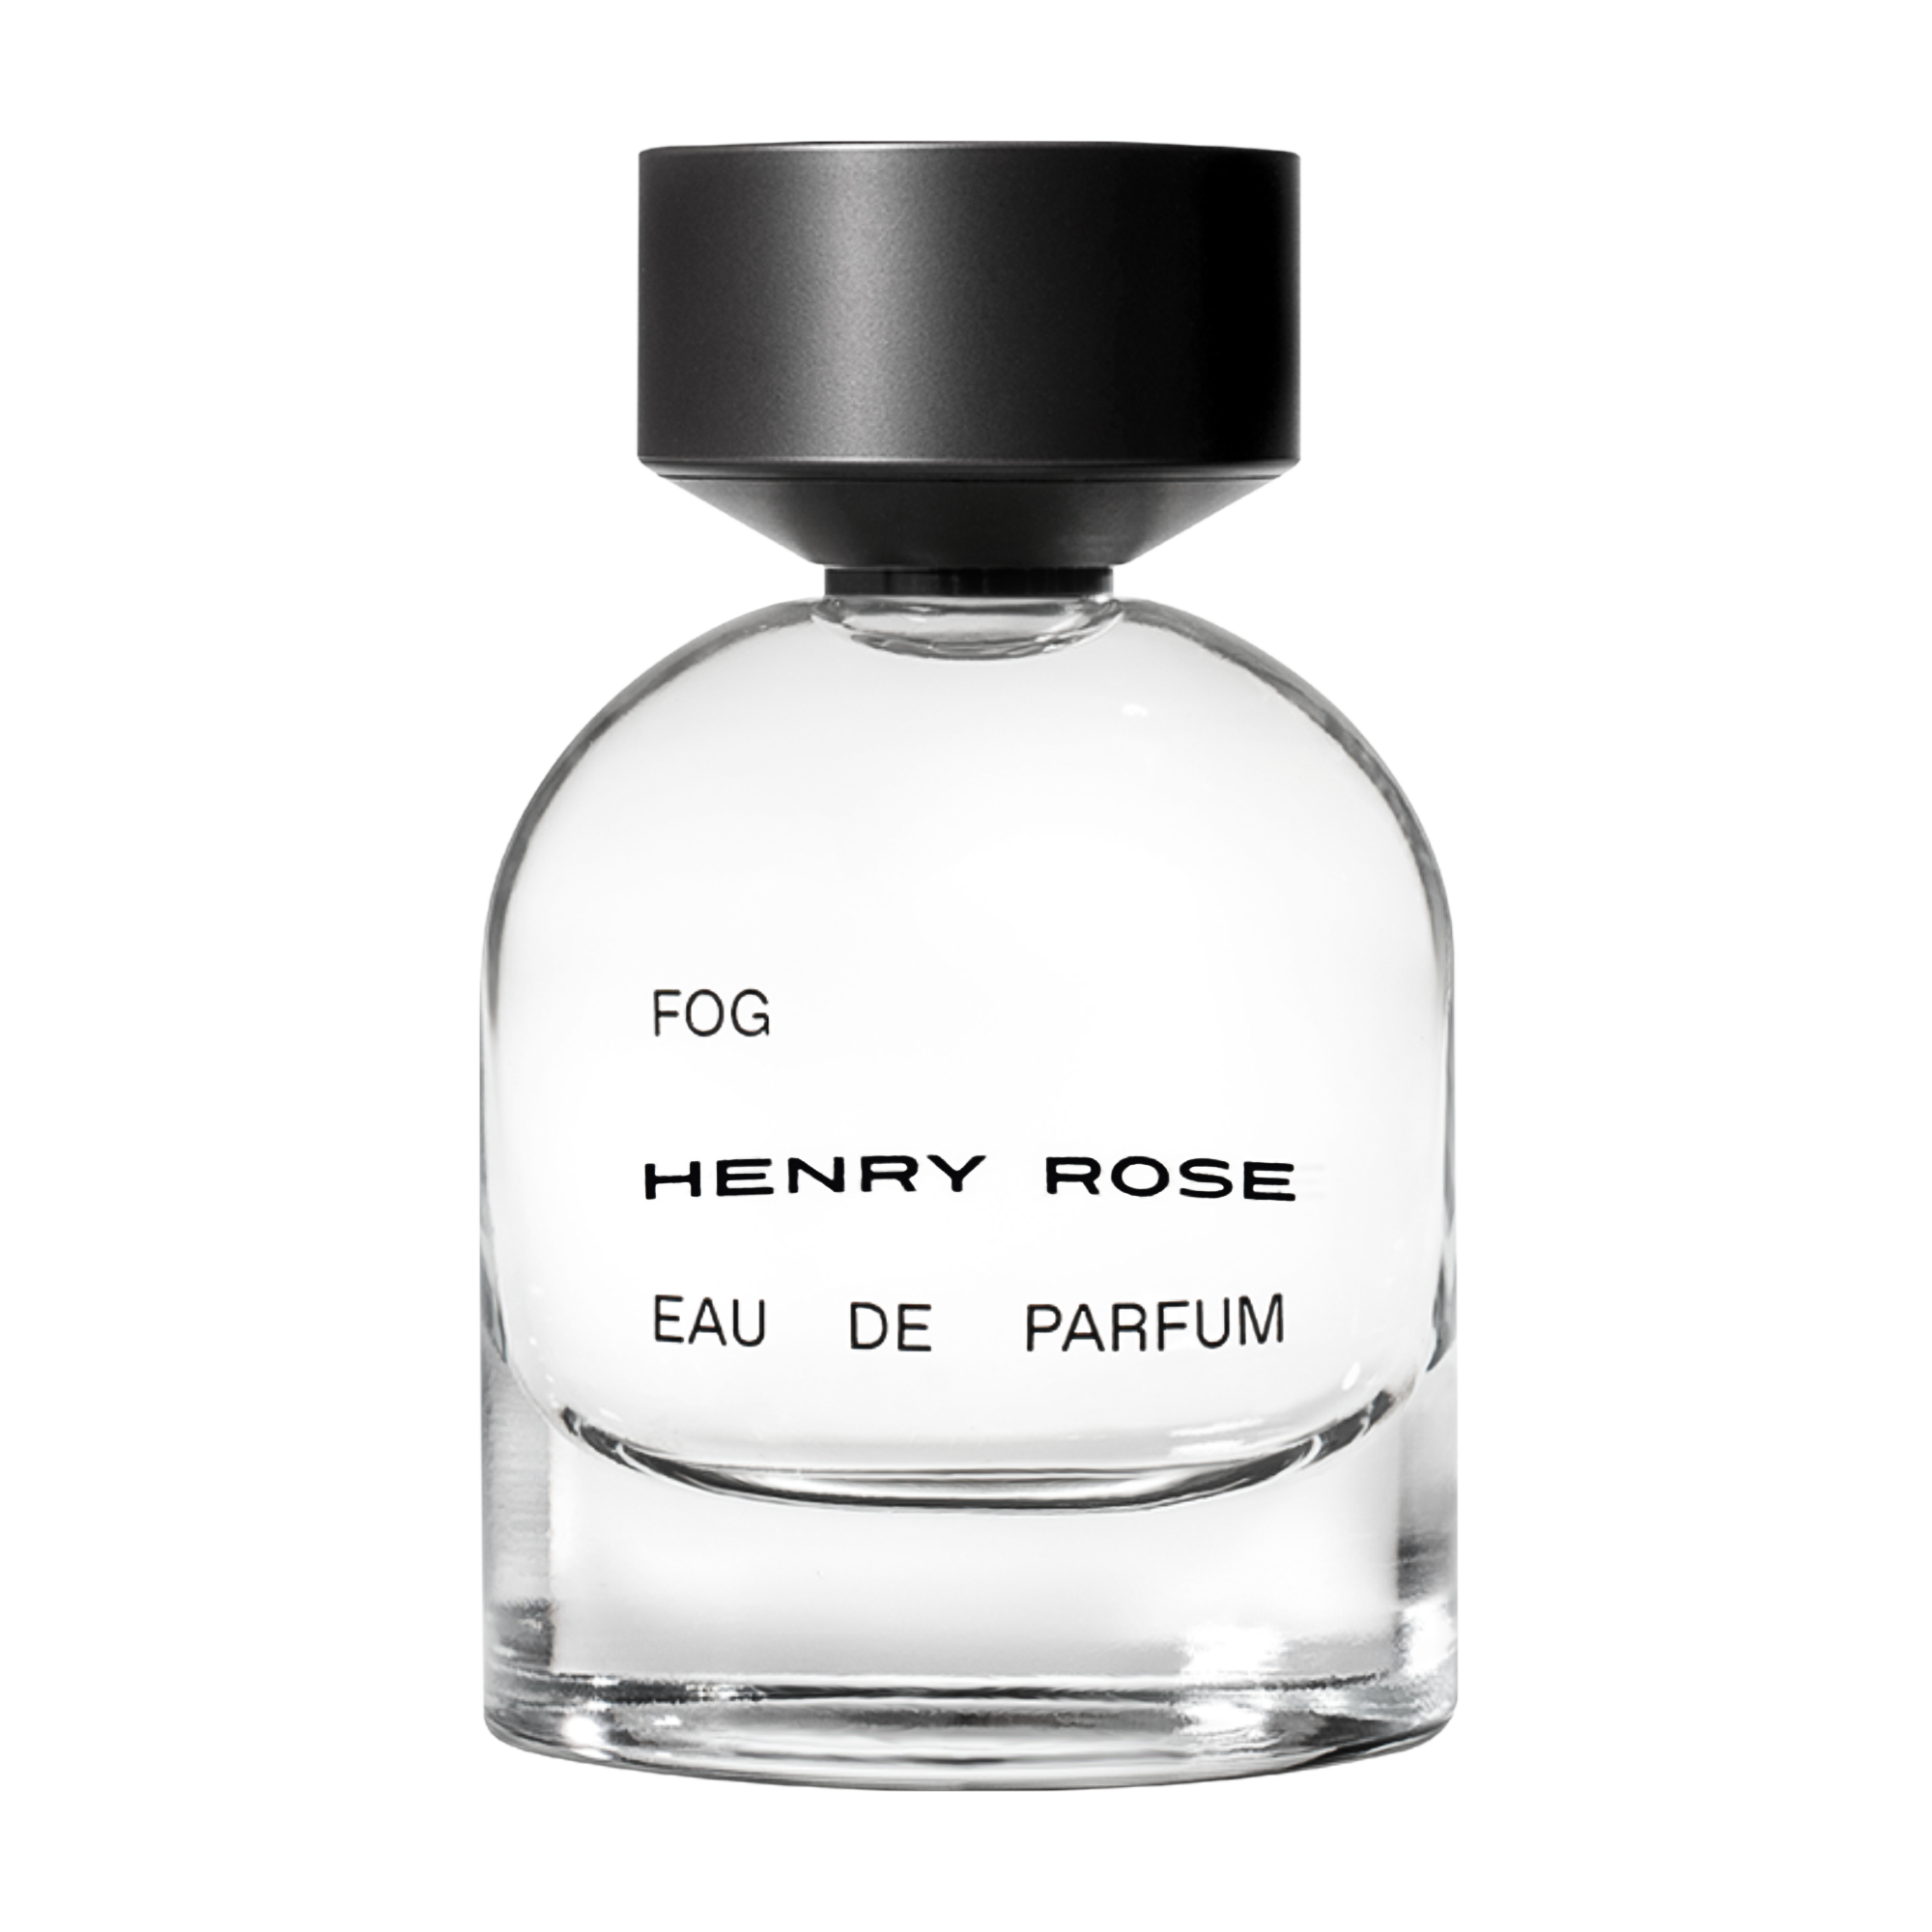 Henry Rose perfume